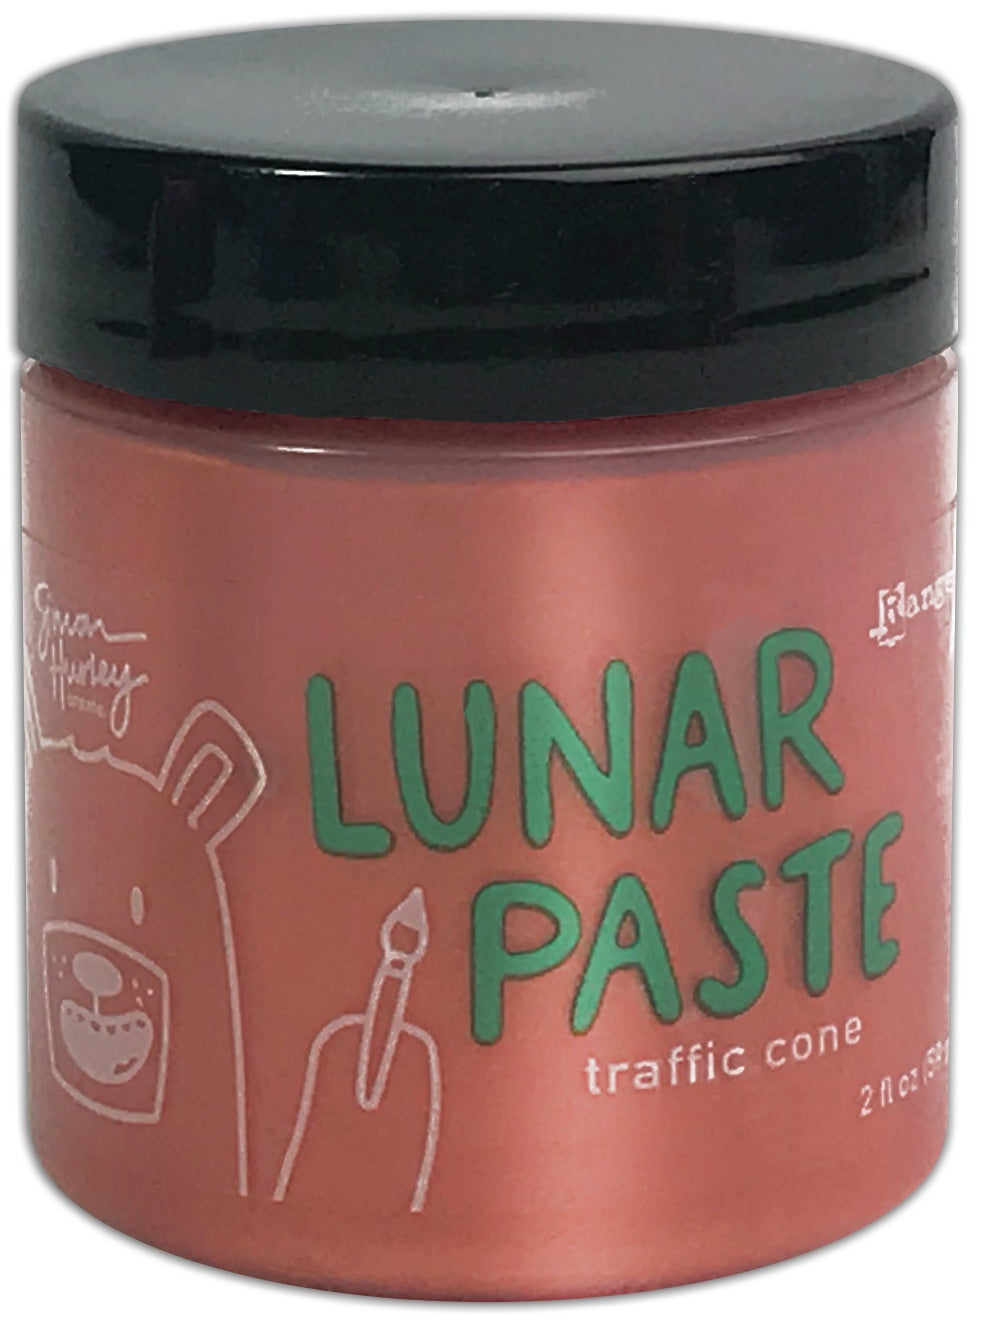 Lunar Paste - Traffic Cone